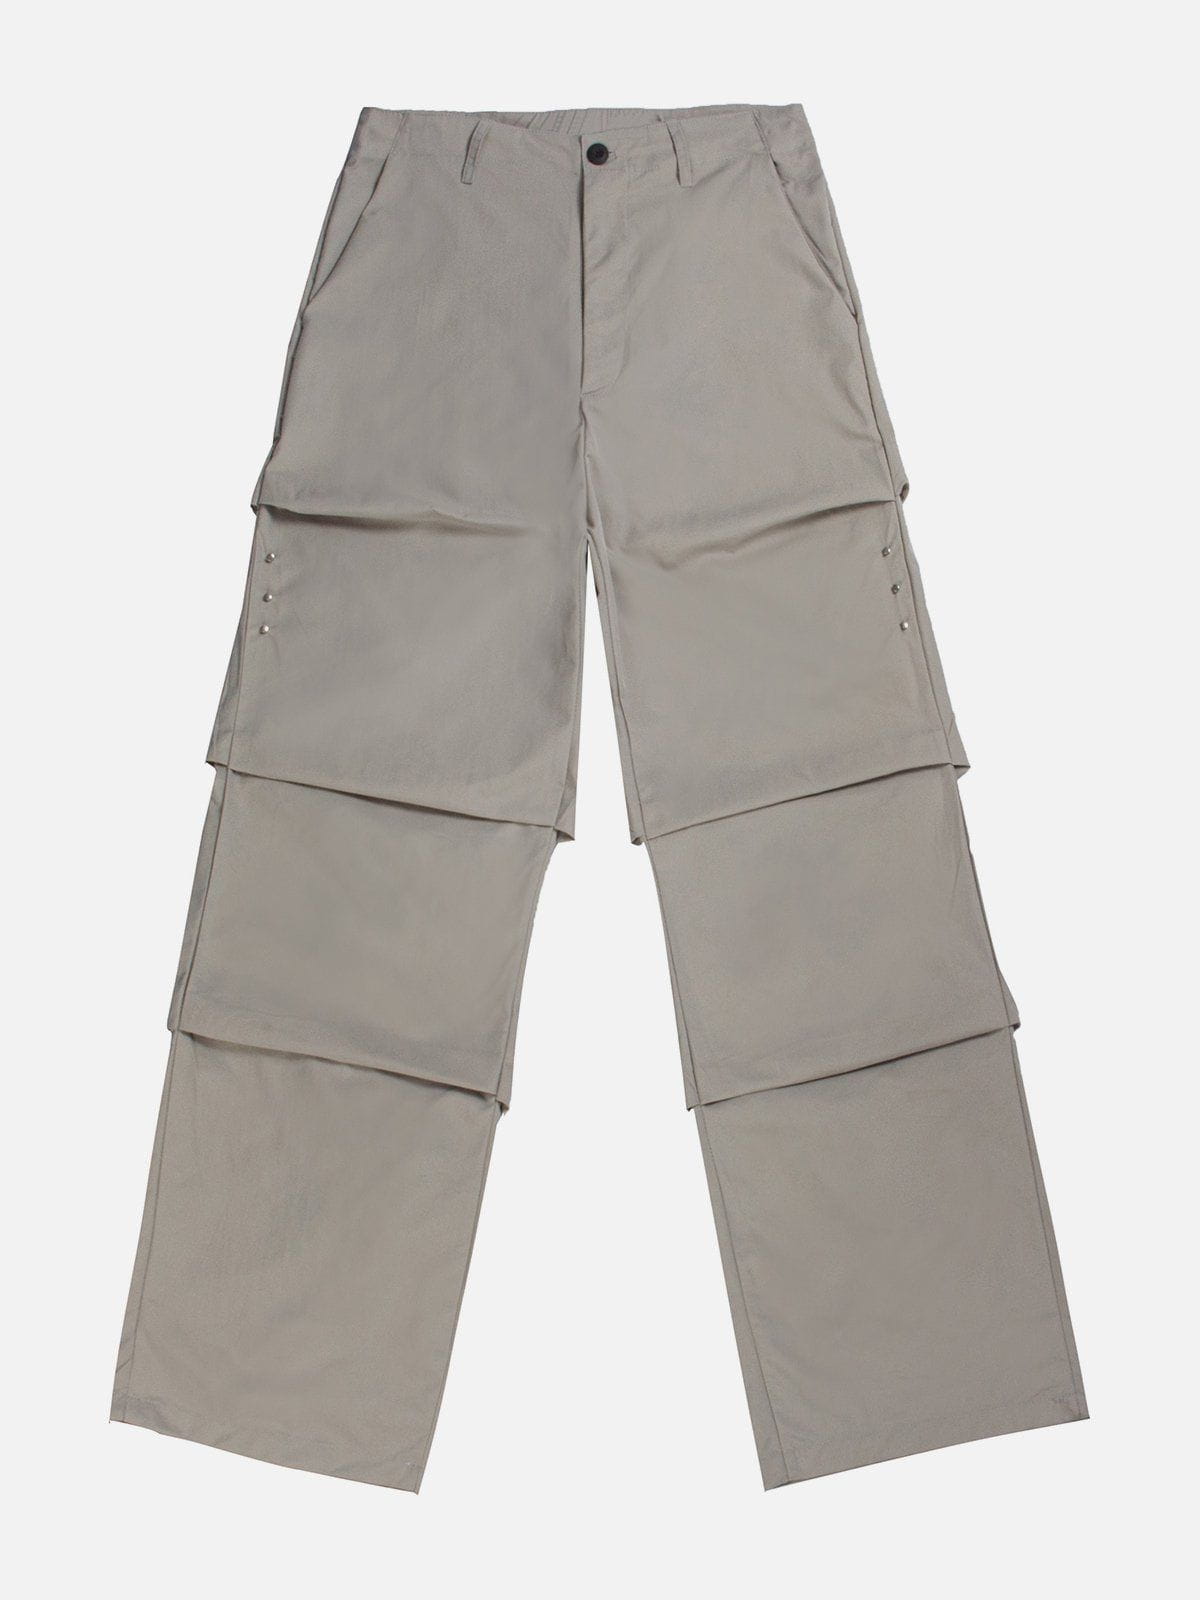 Majesda® - Stacking Cargo Pants outfit ideas streetwear fashion